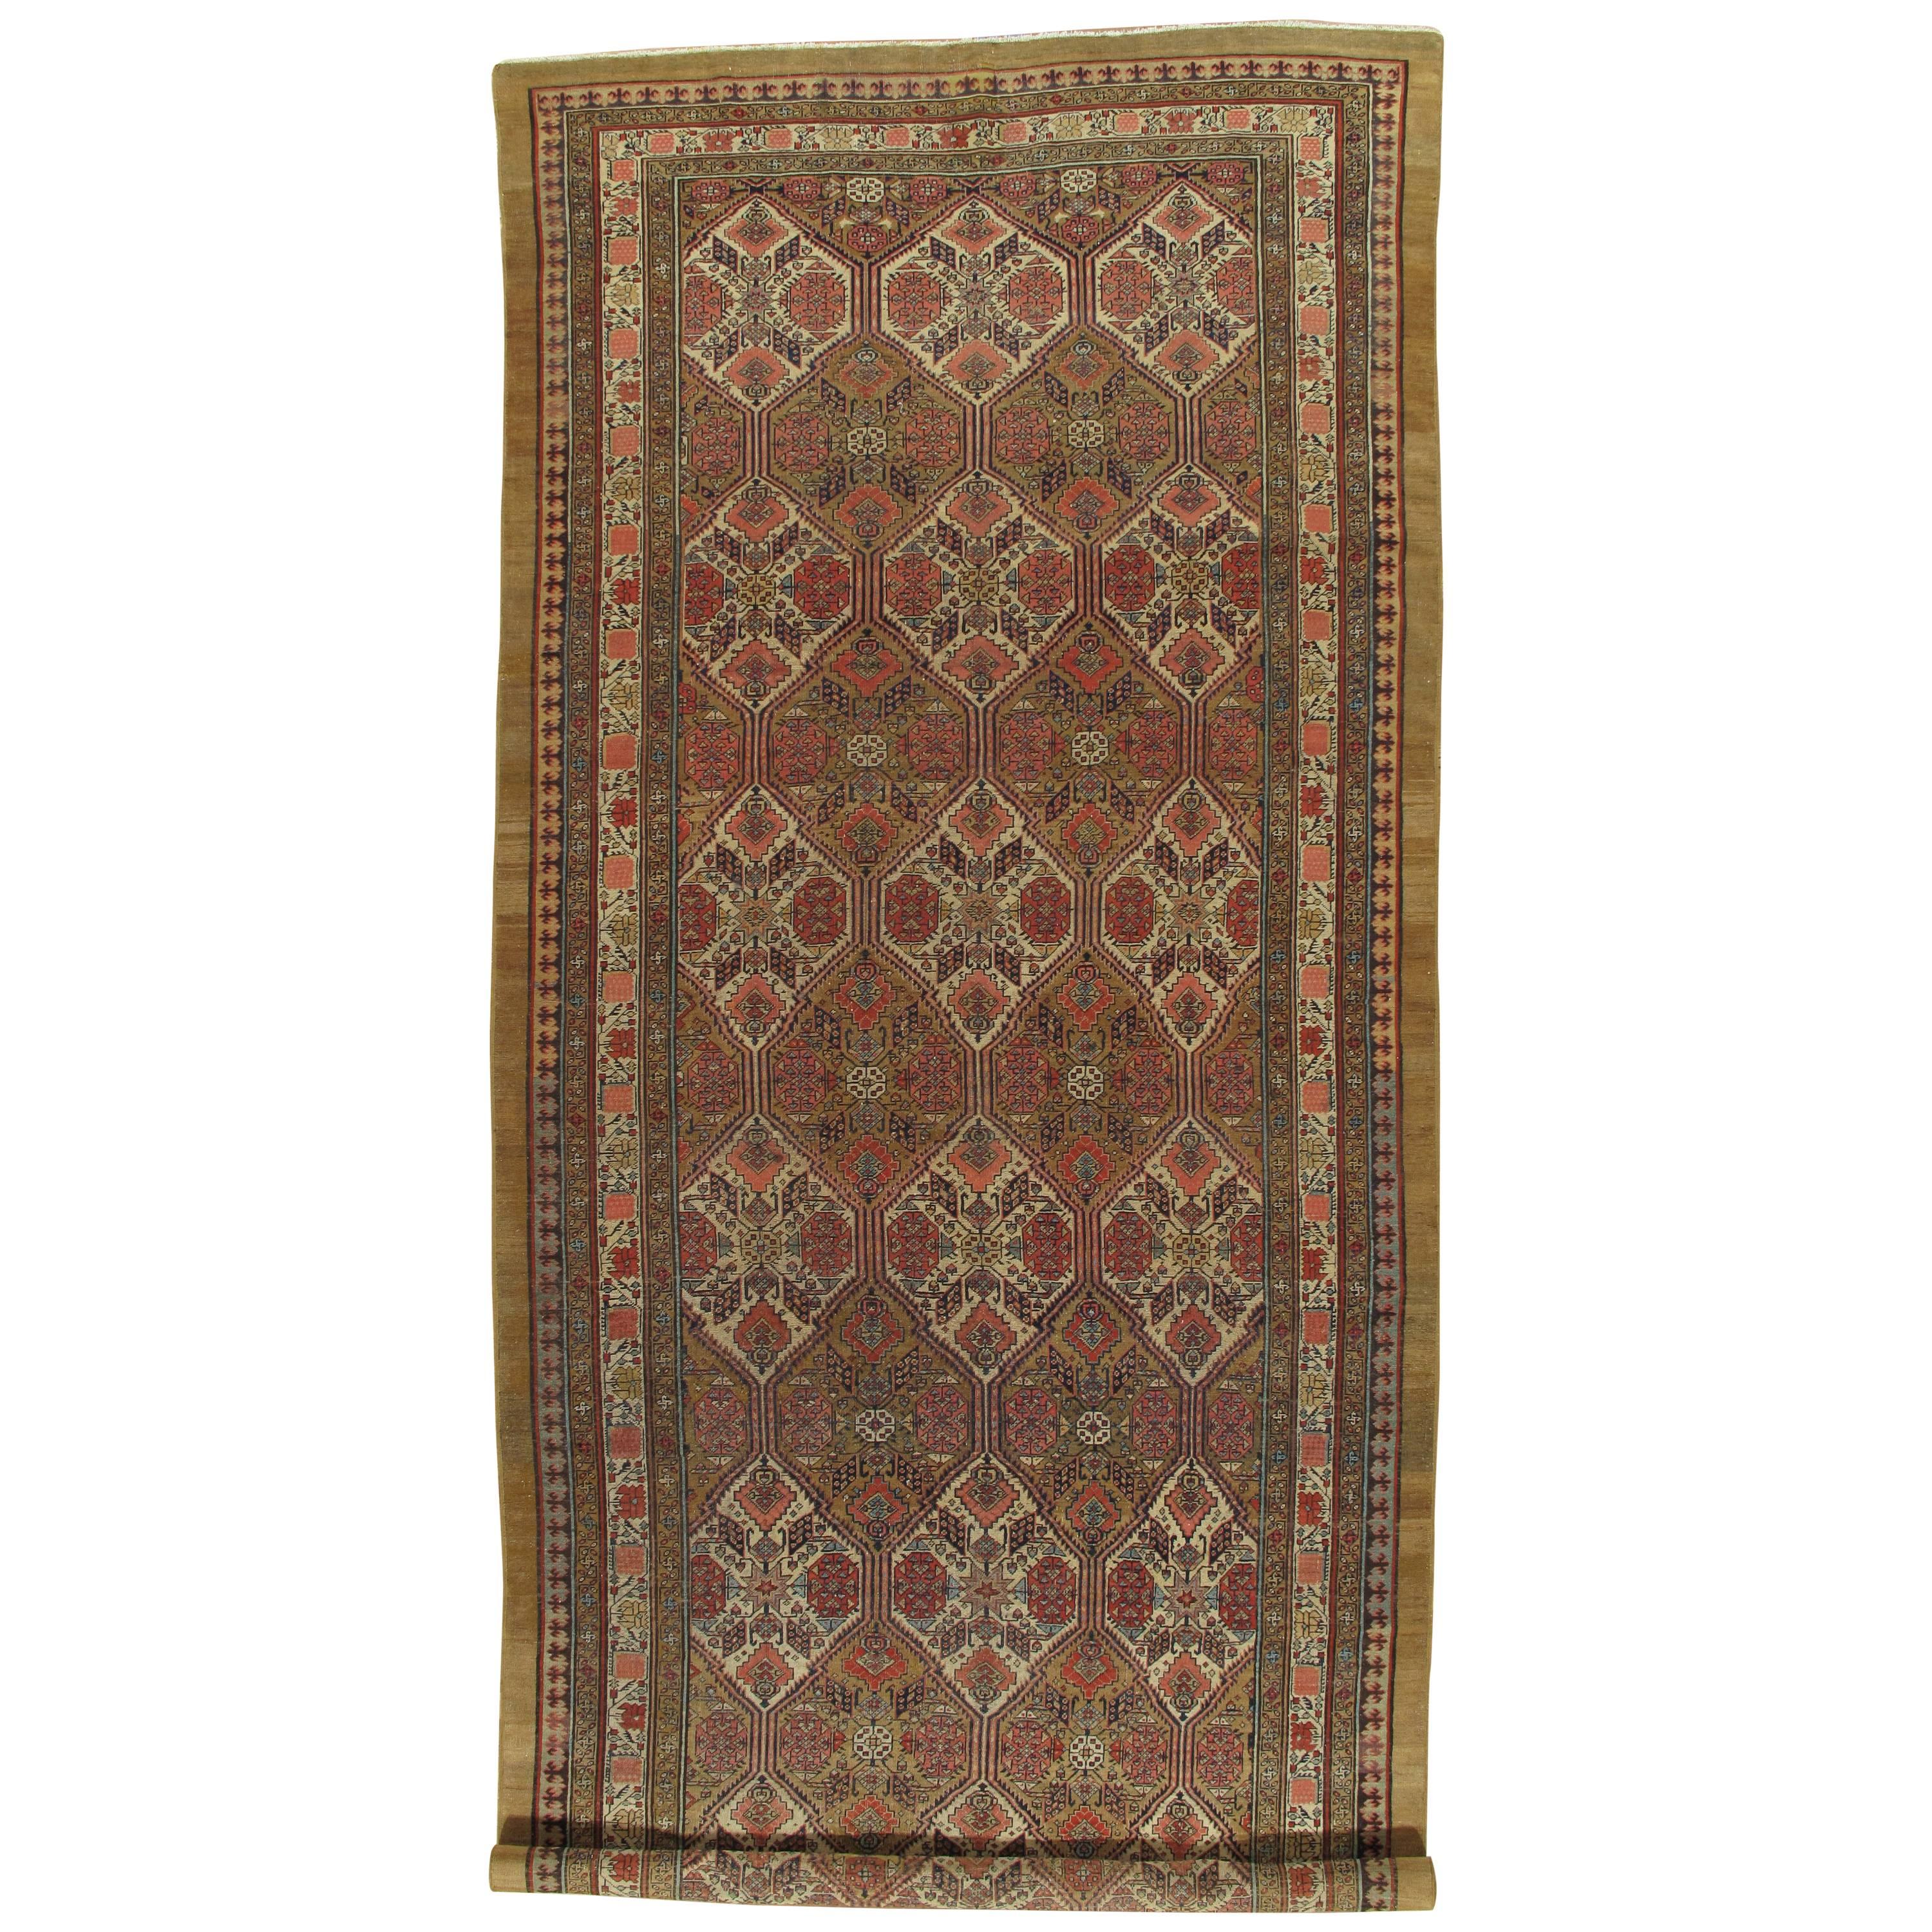 Antique Persian Serab Carpet, Handmade Wool Oriental Rug, Camel Hair, Ivory